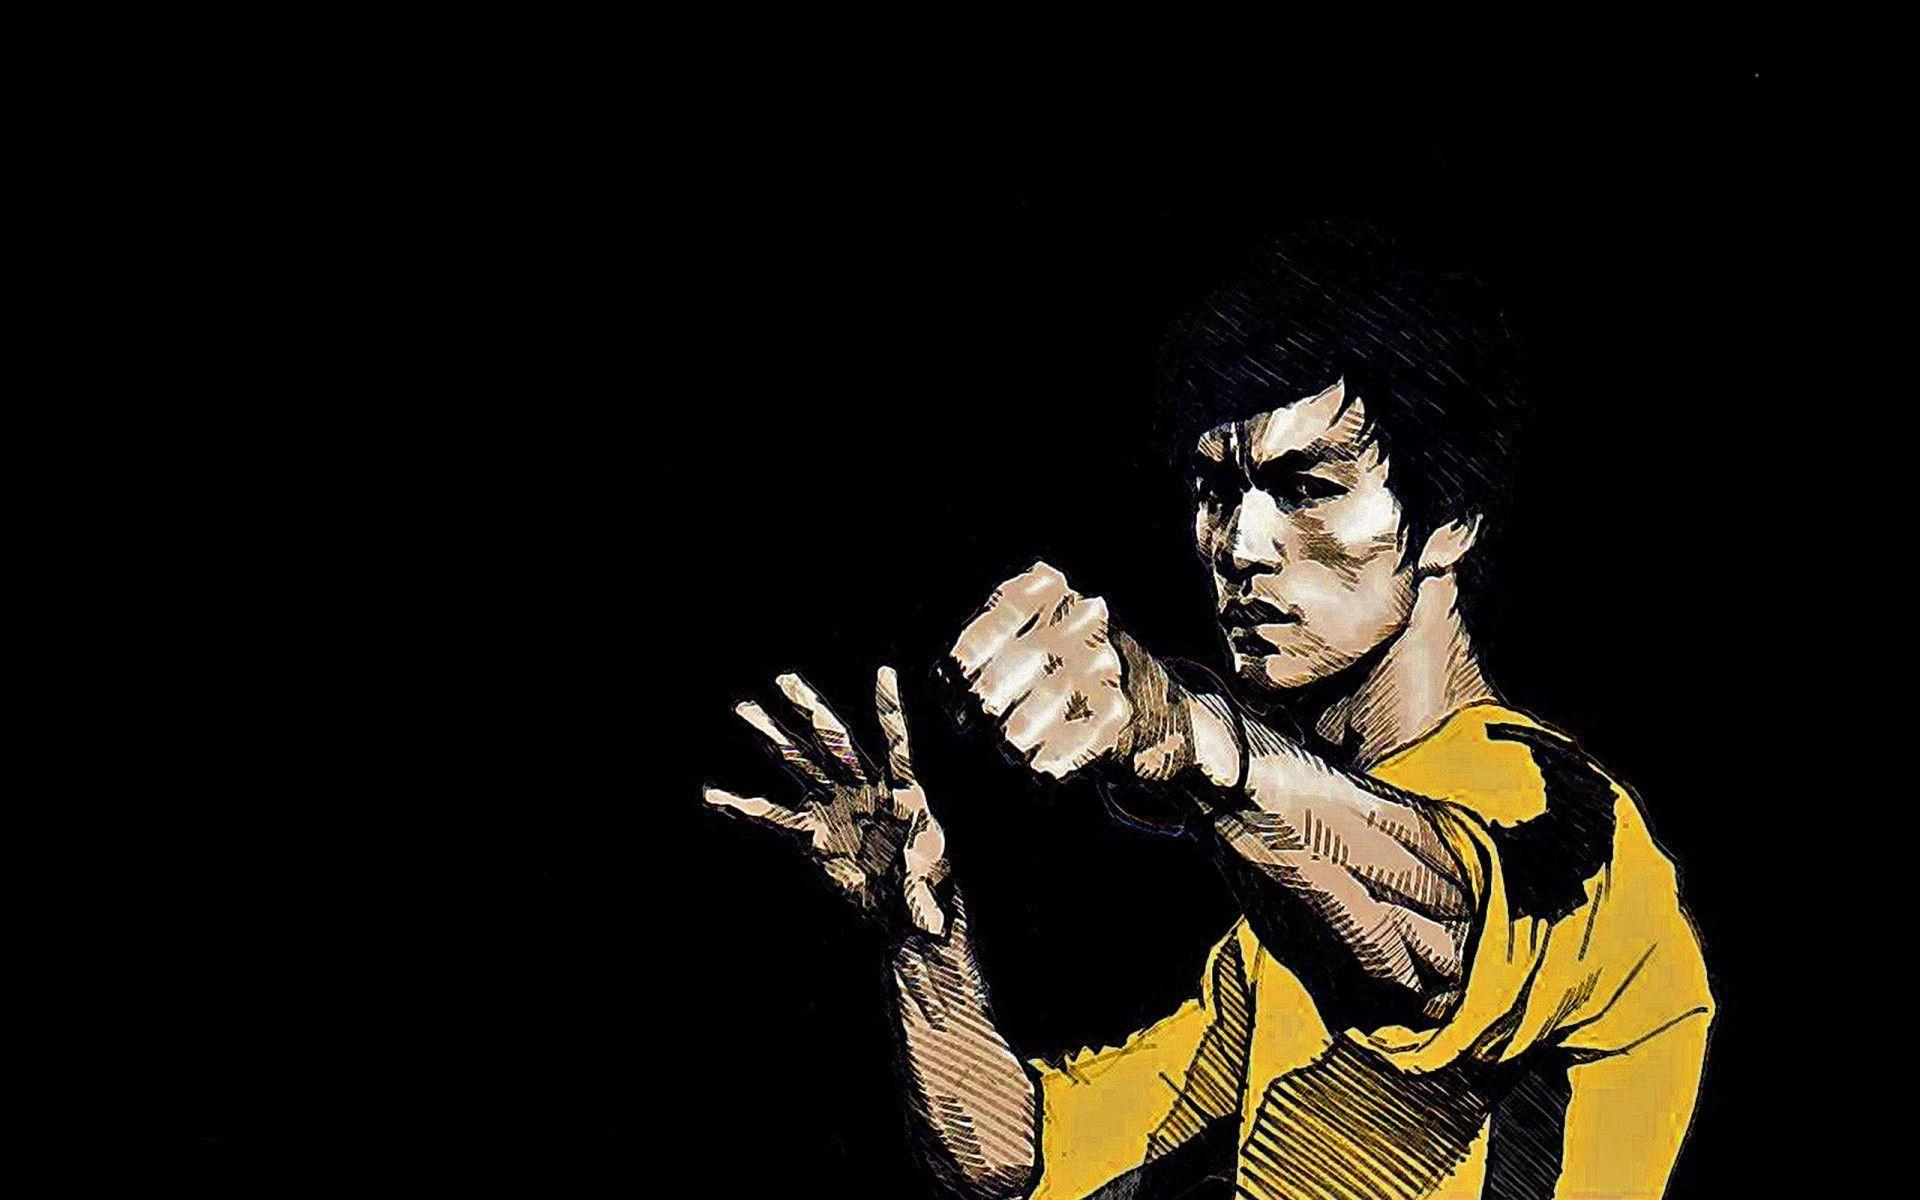 Bruce Lee Wallpaper Hd Iphone - 1920x1200 Wallpaper 